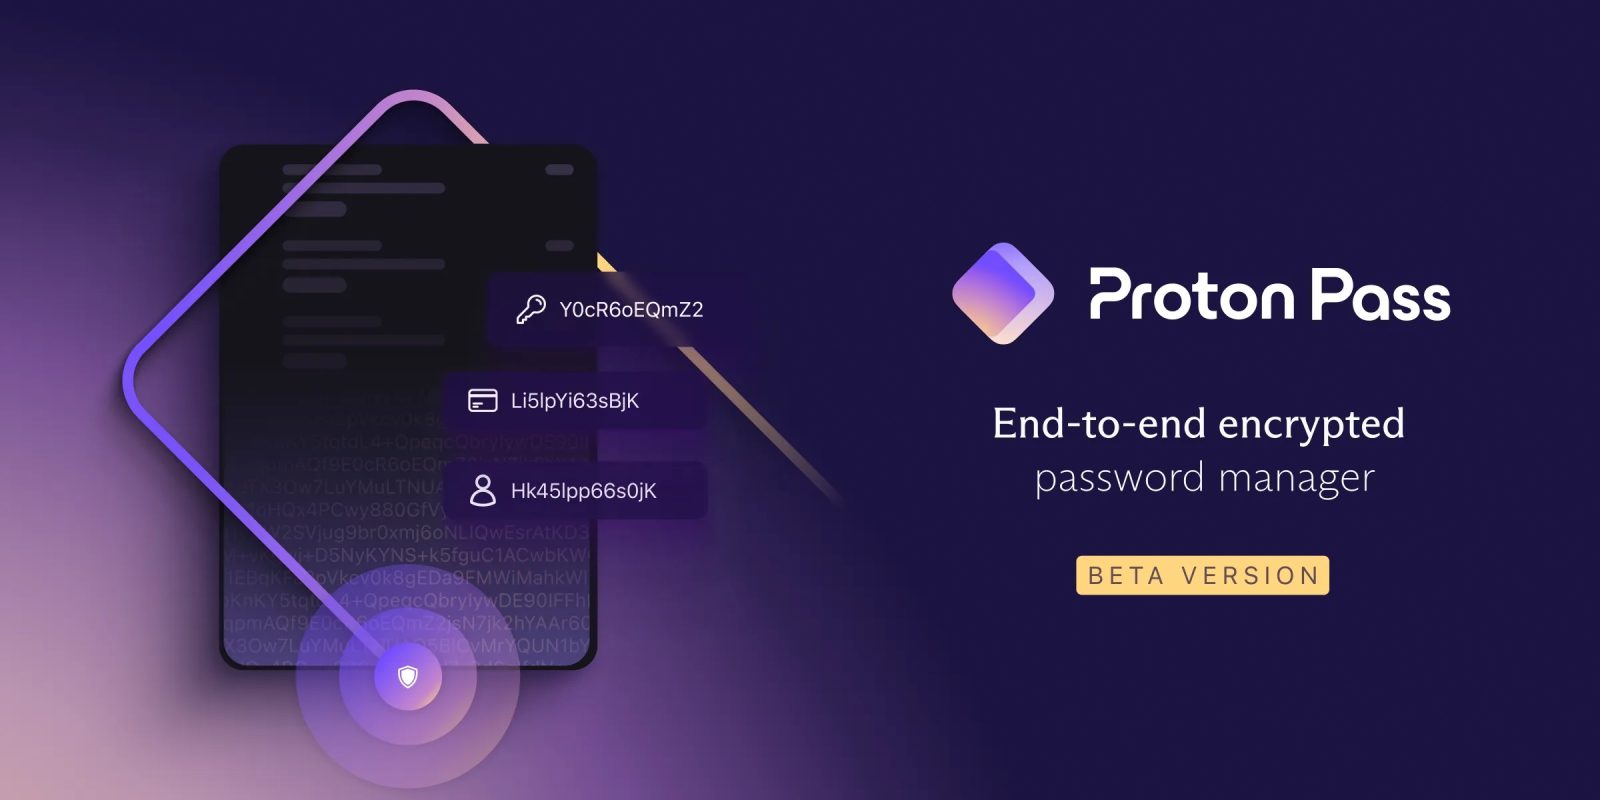 Proton Pass encrypted password manager beta